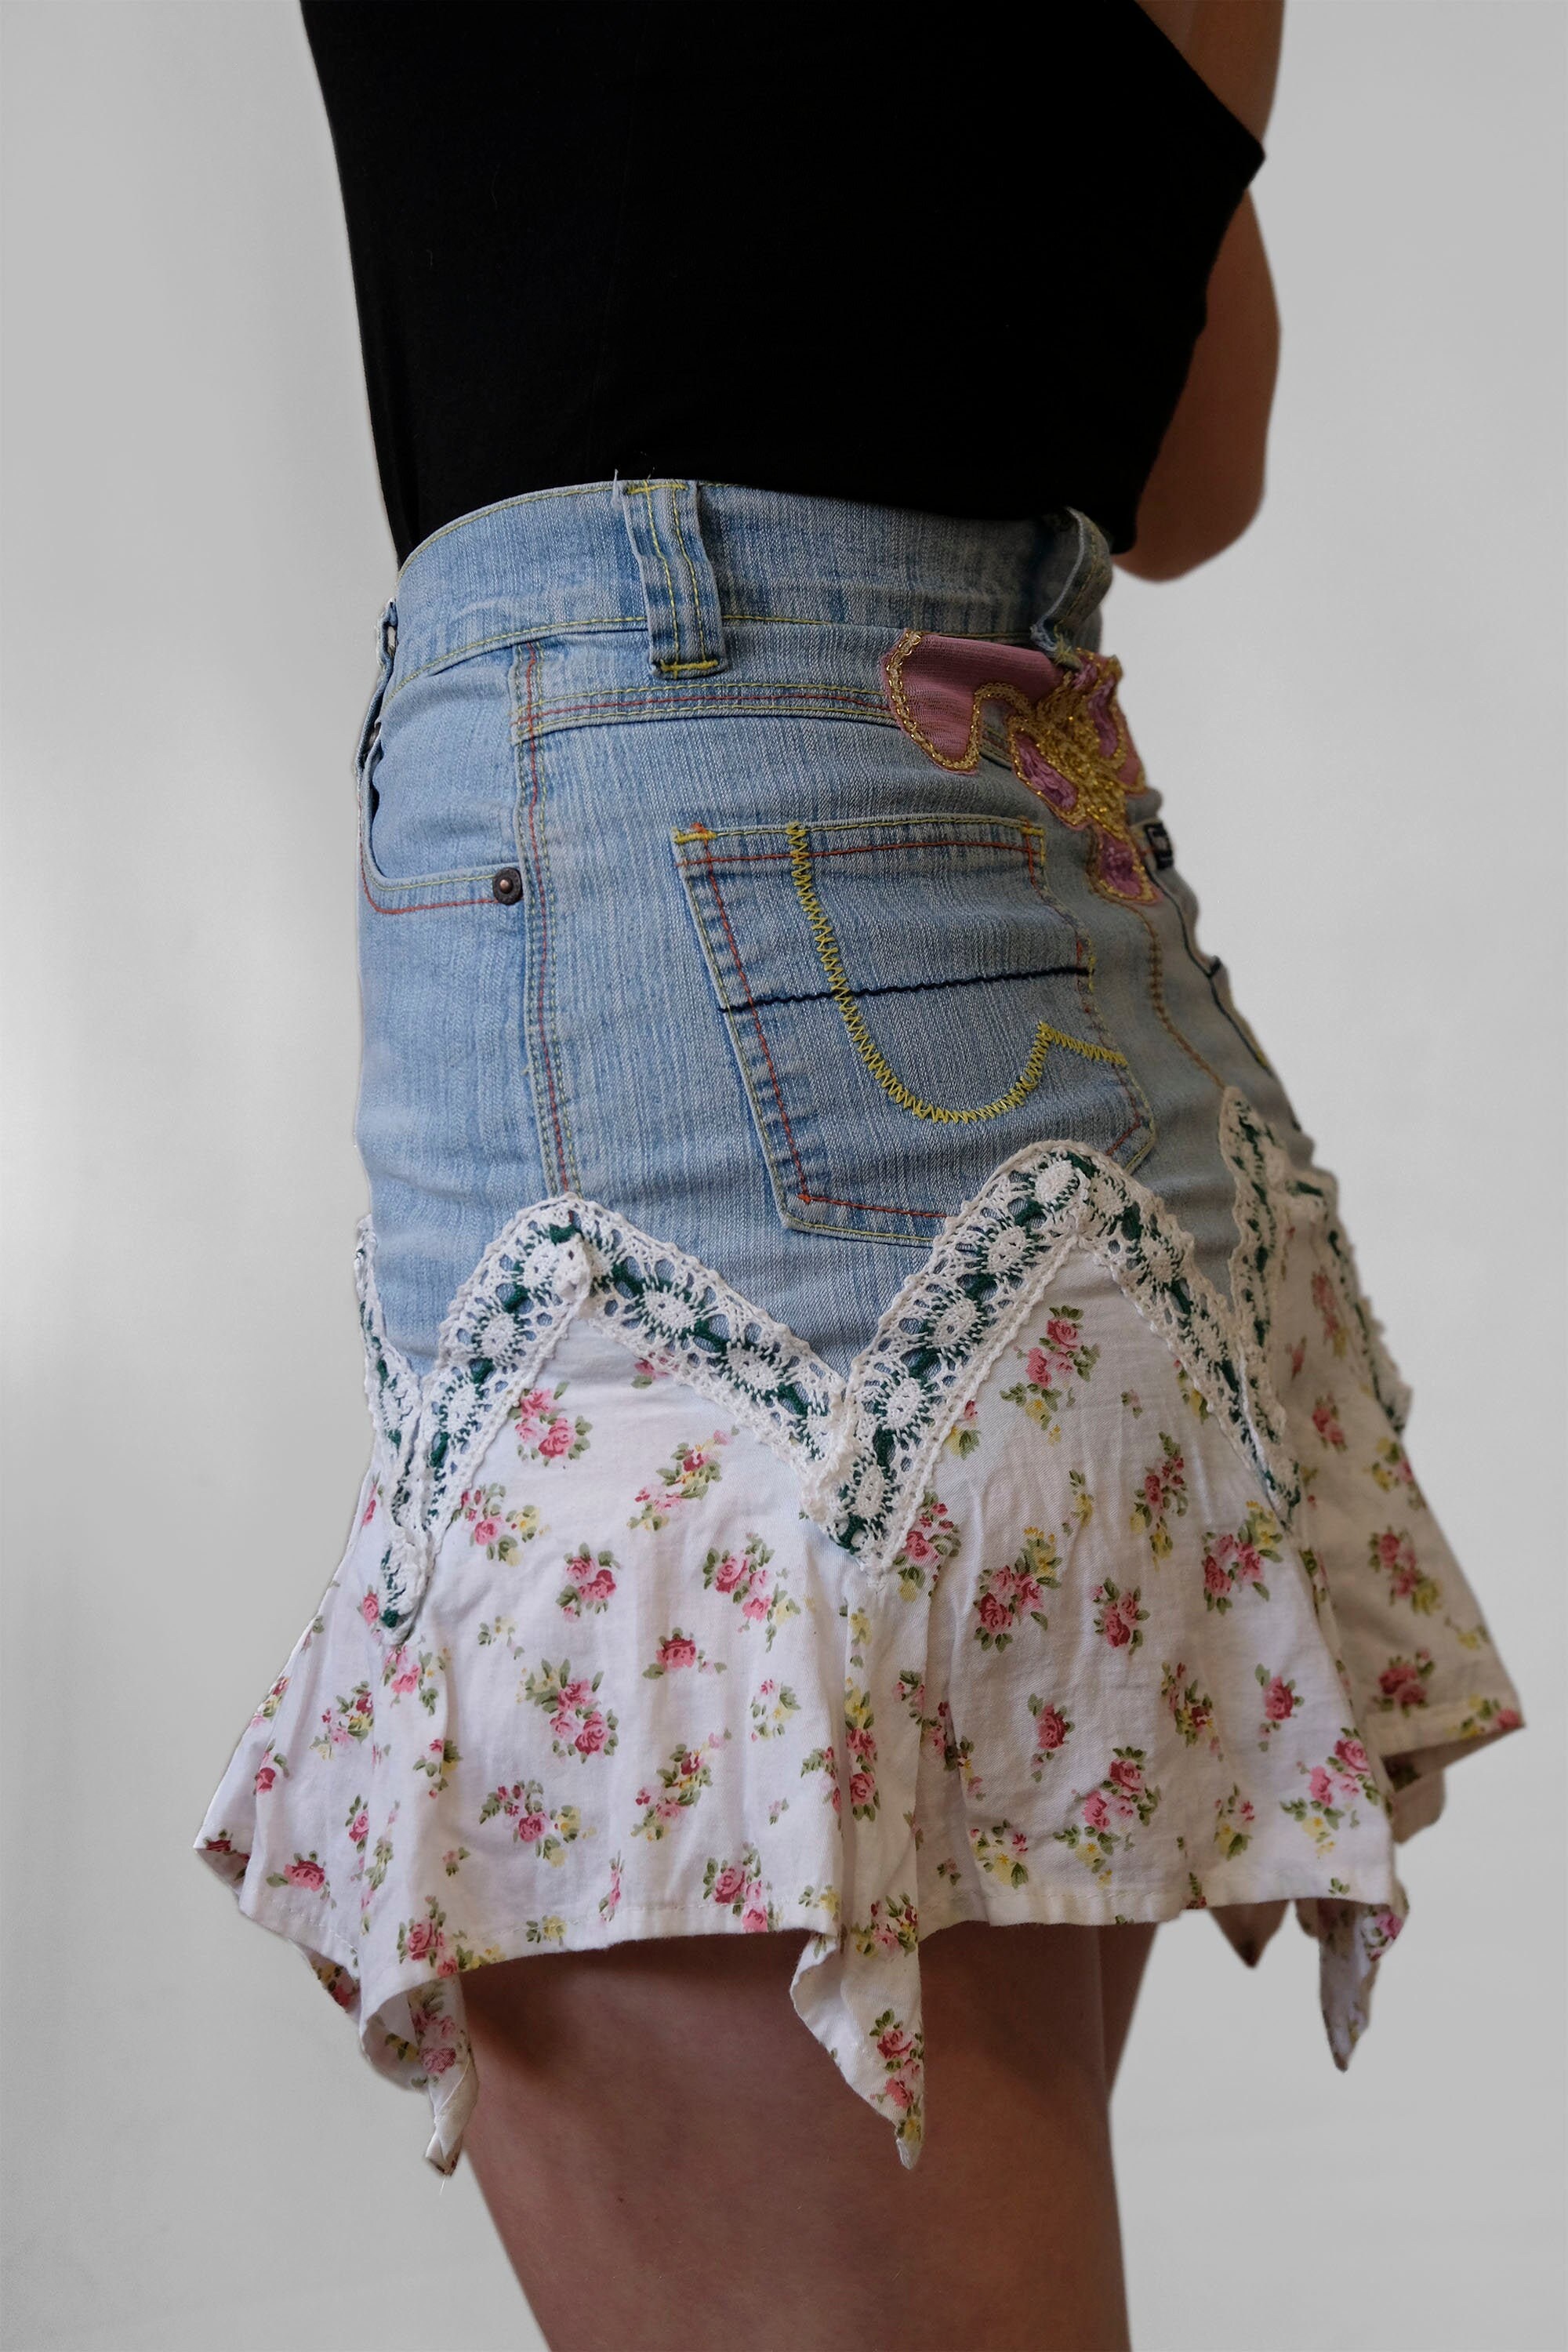 Upcycled Jeans Skirt Valence - Etsy